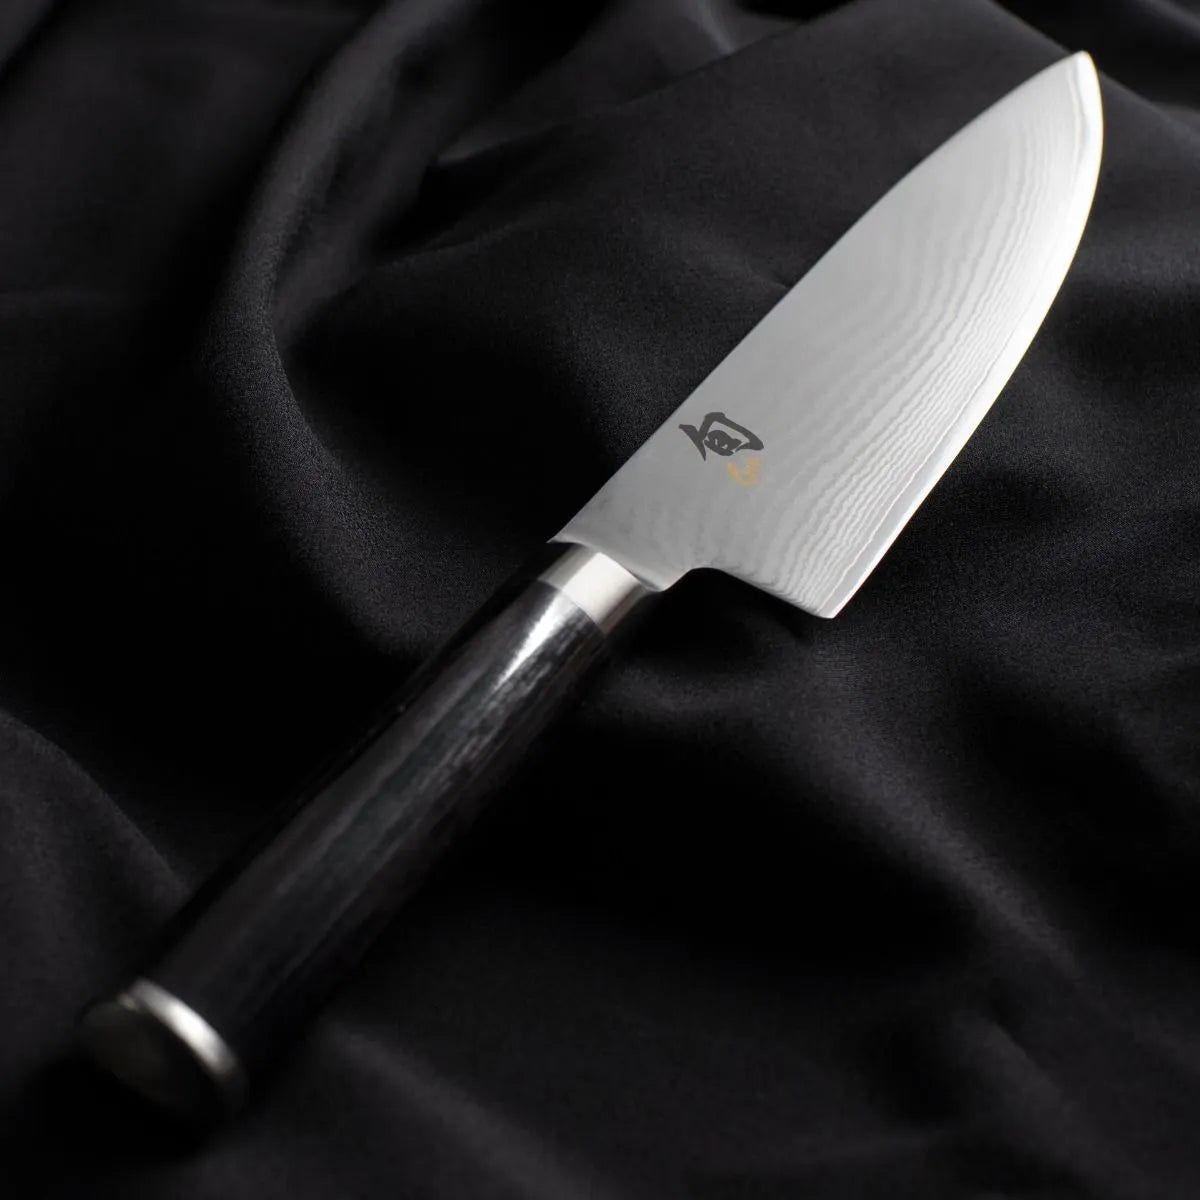 Kai Shun Classic Stainless Steel Chef Knife 8-Inch D-Shape Handle [DM0706]